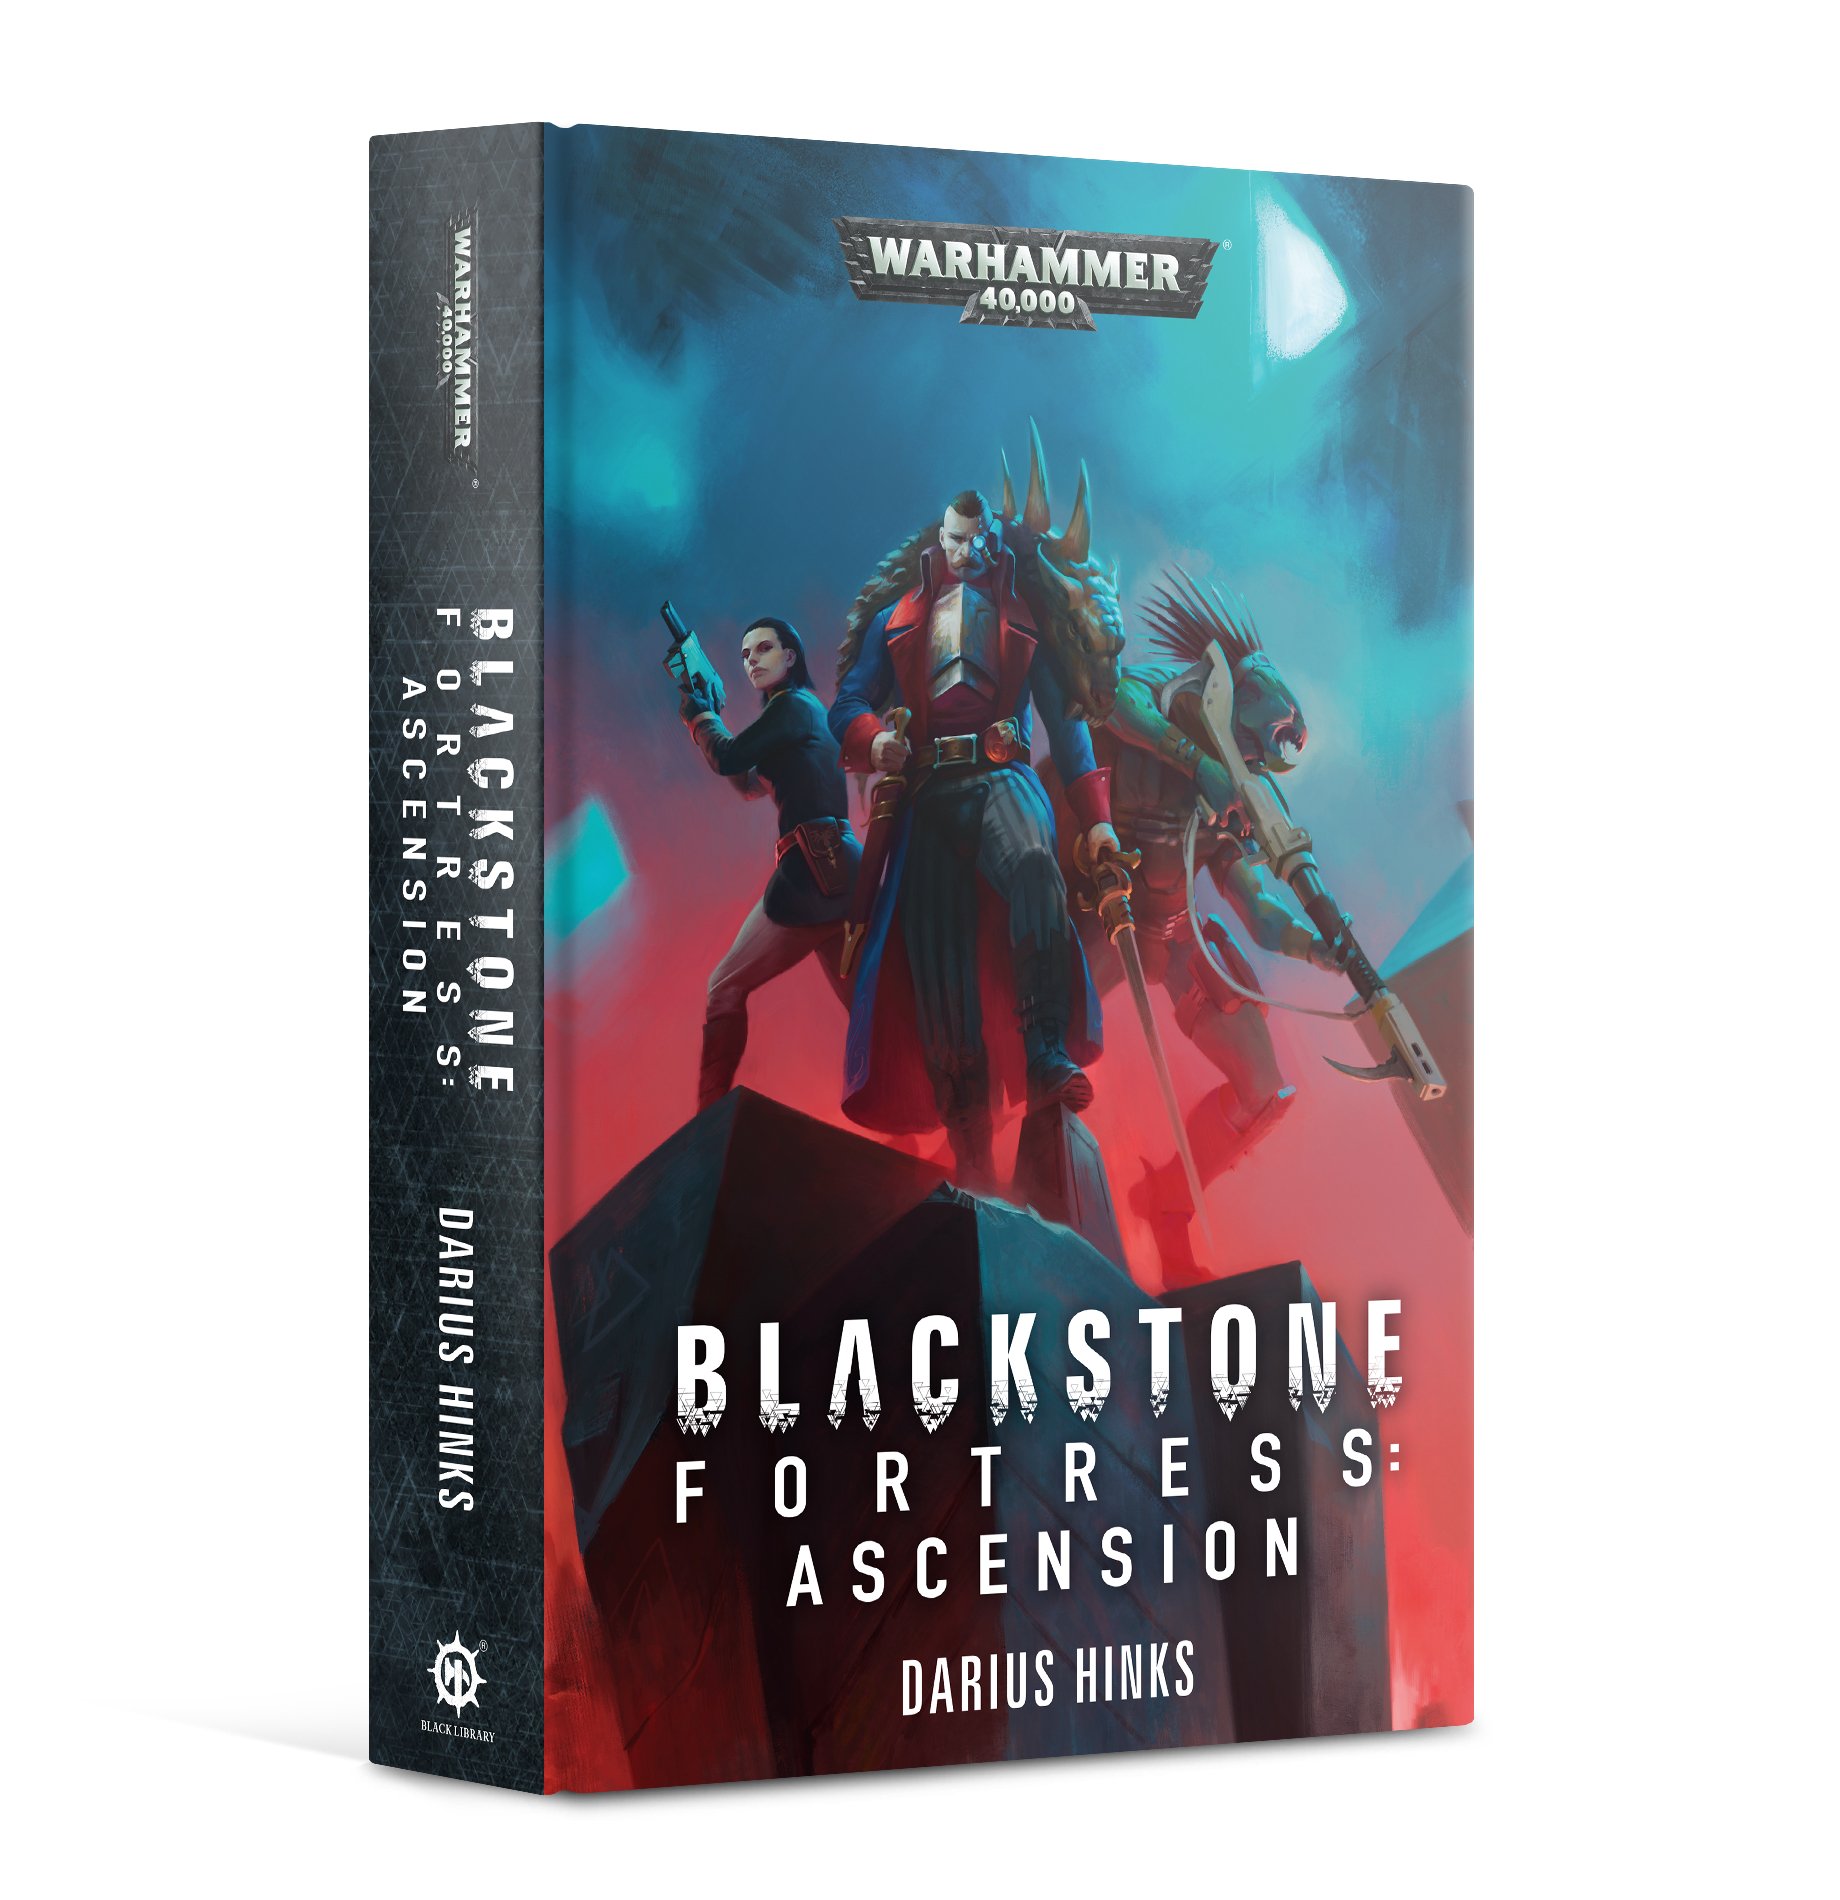 Black Library: Warhammer Quest: Blackstone Fortress - Ascension (PB) 